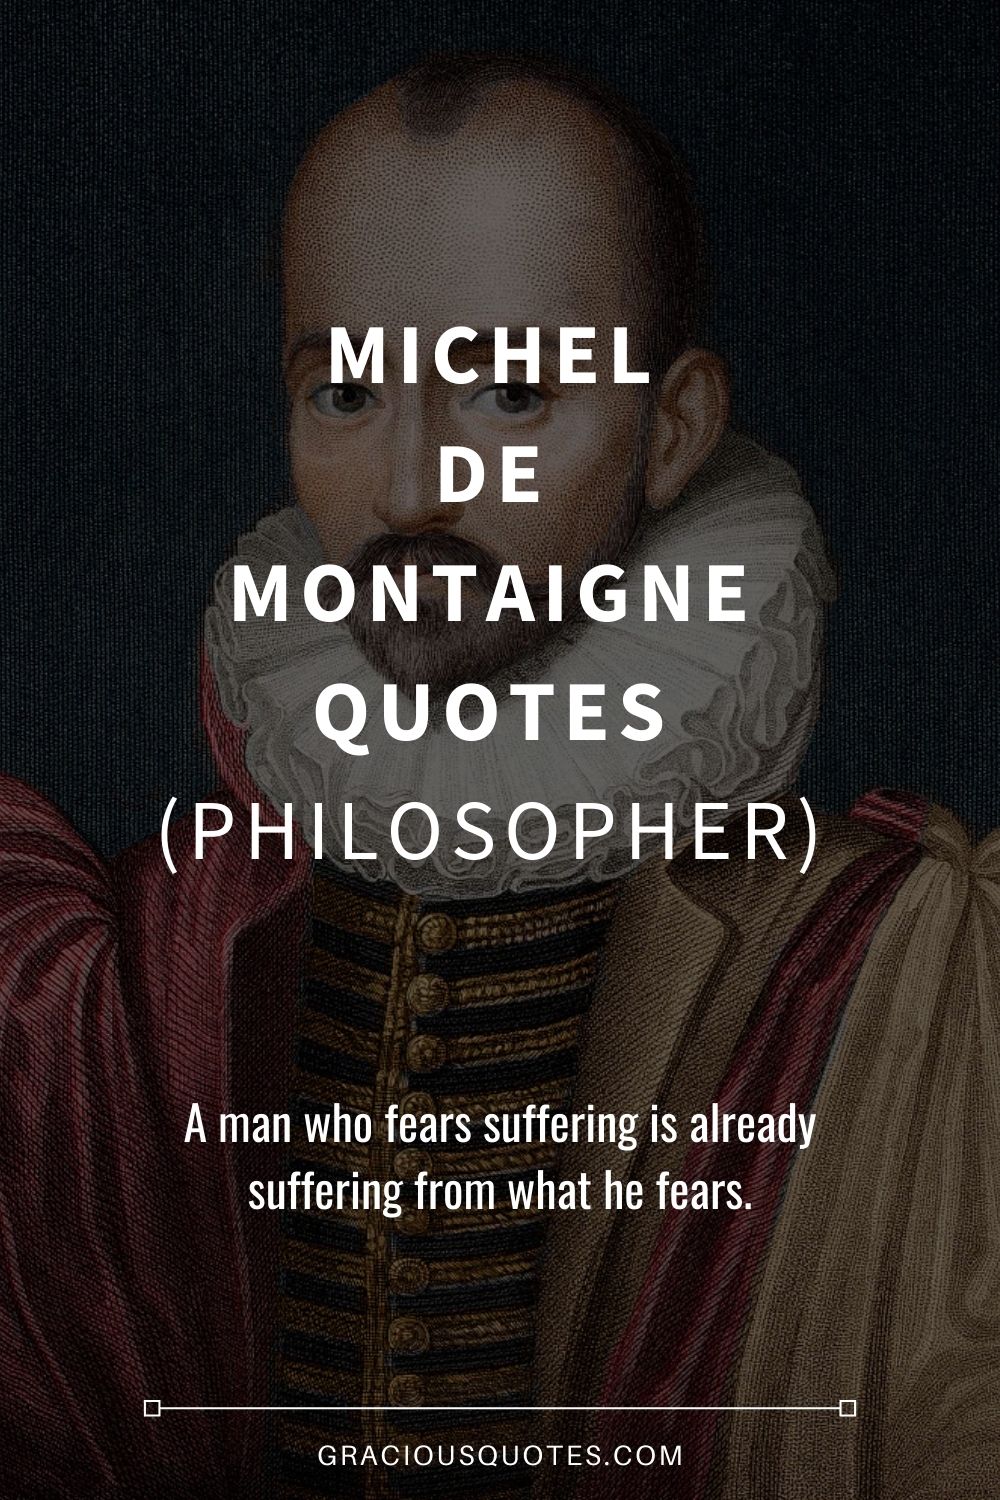 Michel de Montaigne Quotes (PHILOSOPHER) - Gracious Quotes